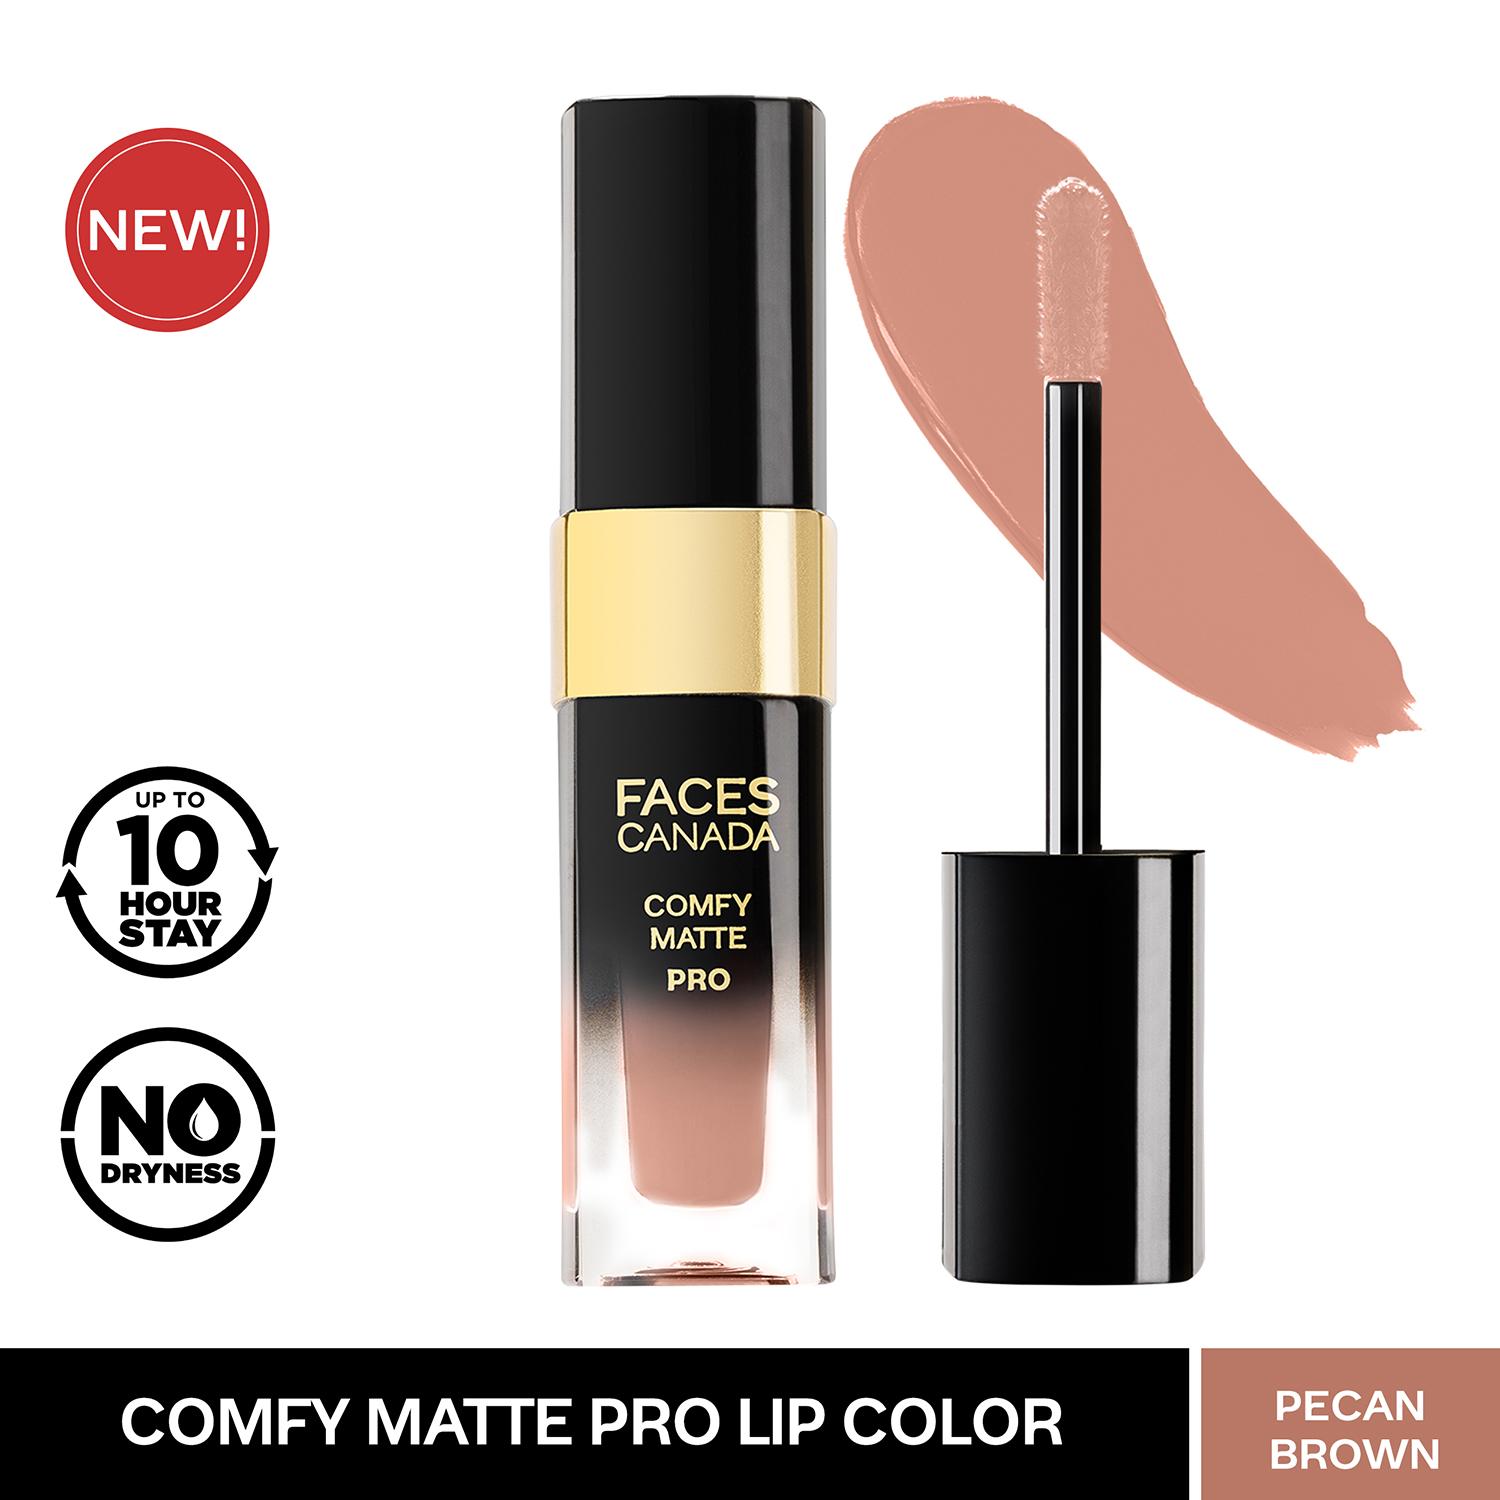 Faces Canada | Faces Canada Comfy Matte Pro Liquid Lipstick - Pecan Brown 15, 10HR Stay, No Dryness (5.5 ml)